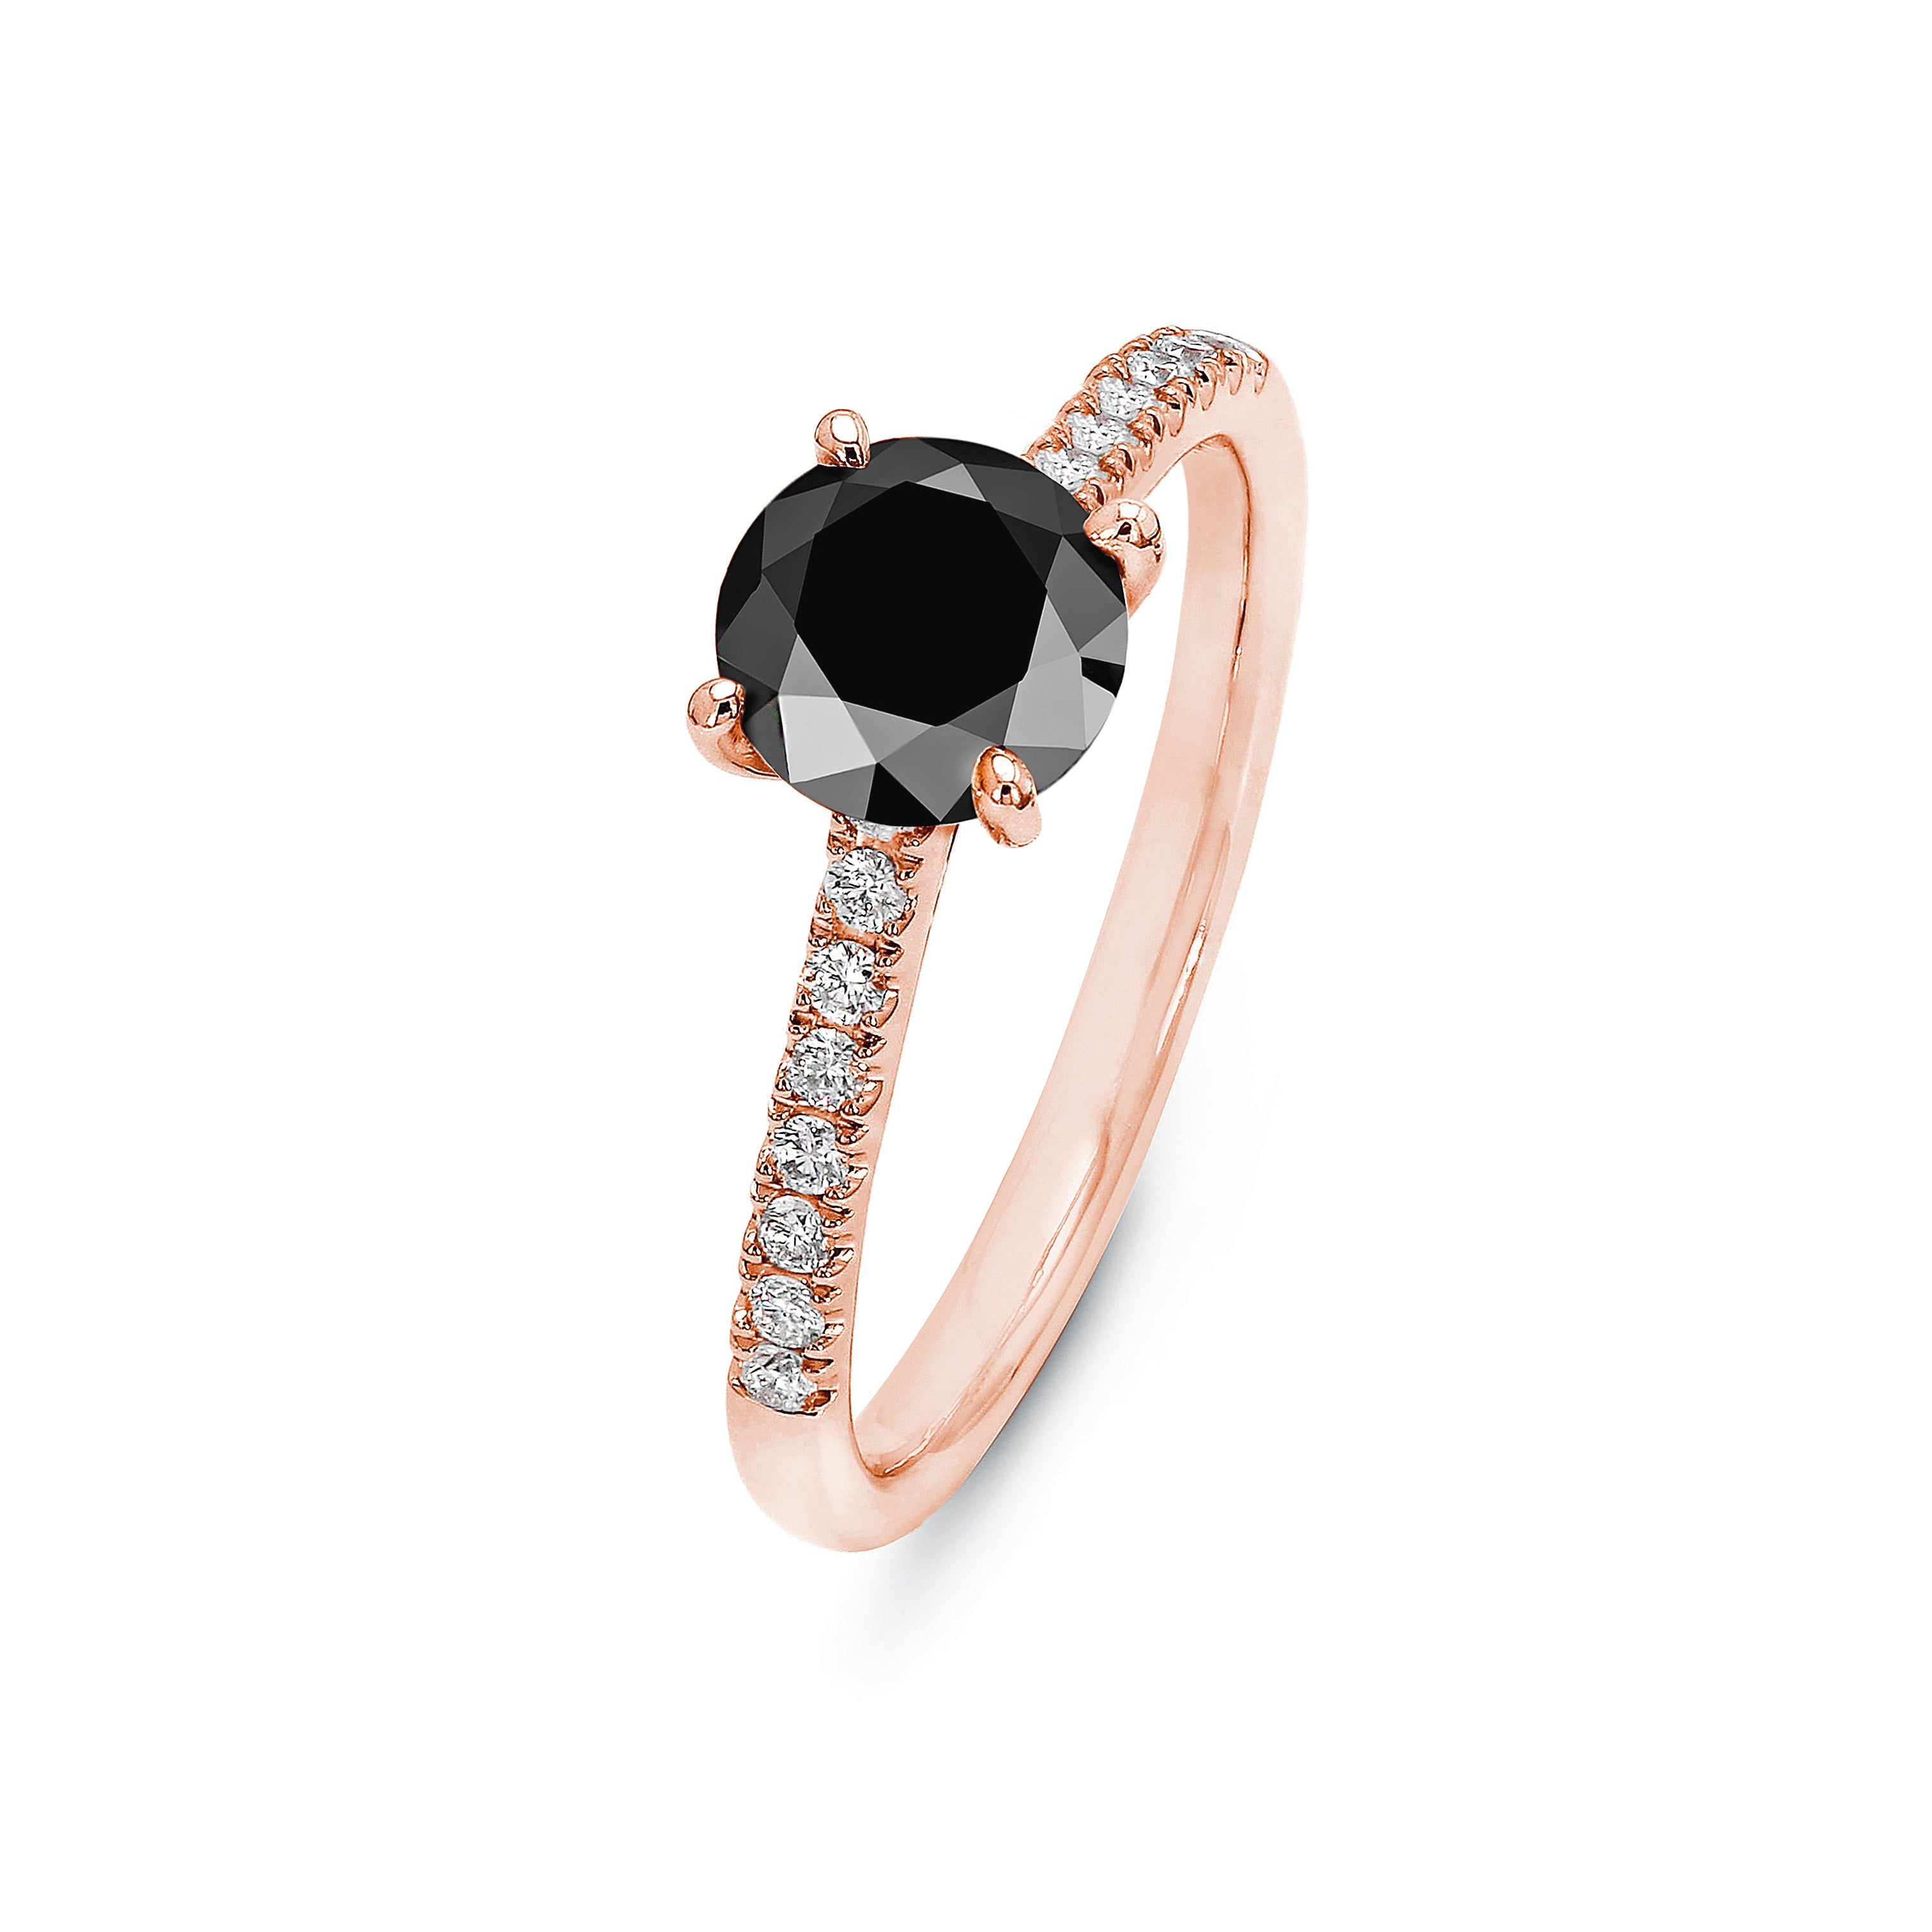 Shimansky - Black Diamond Microset Ring 1.40ct crafted in 18K Rose Gold